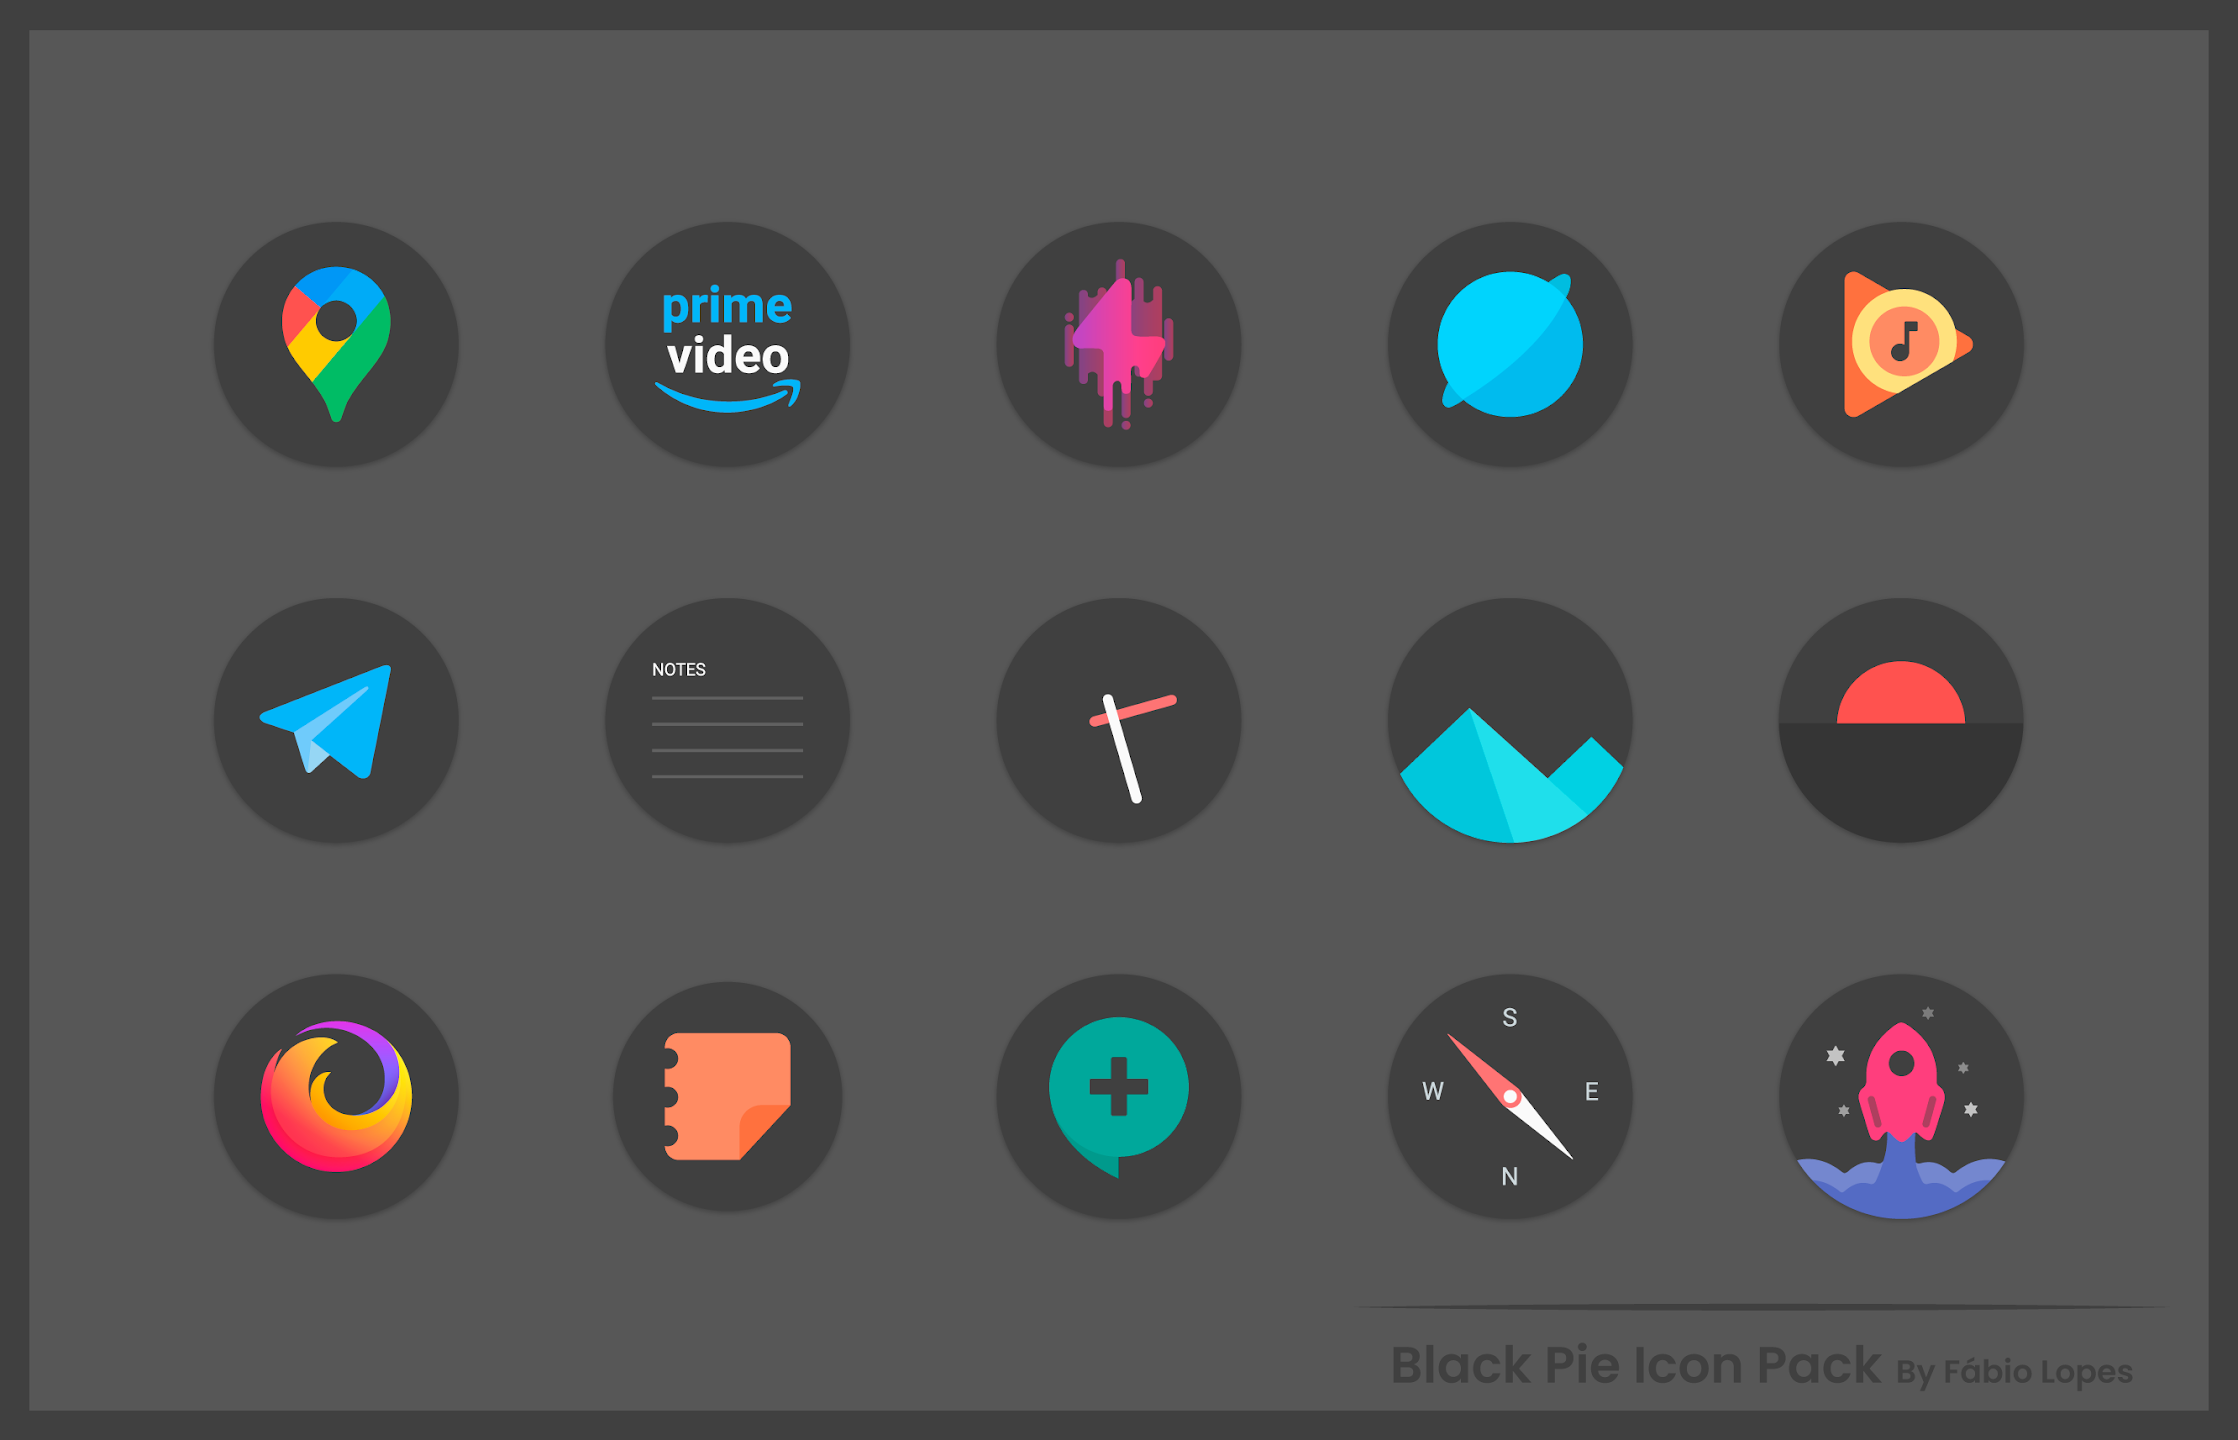 Black Pie - Icon Pack mod apk free download